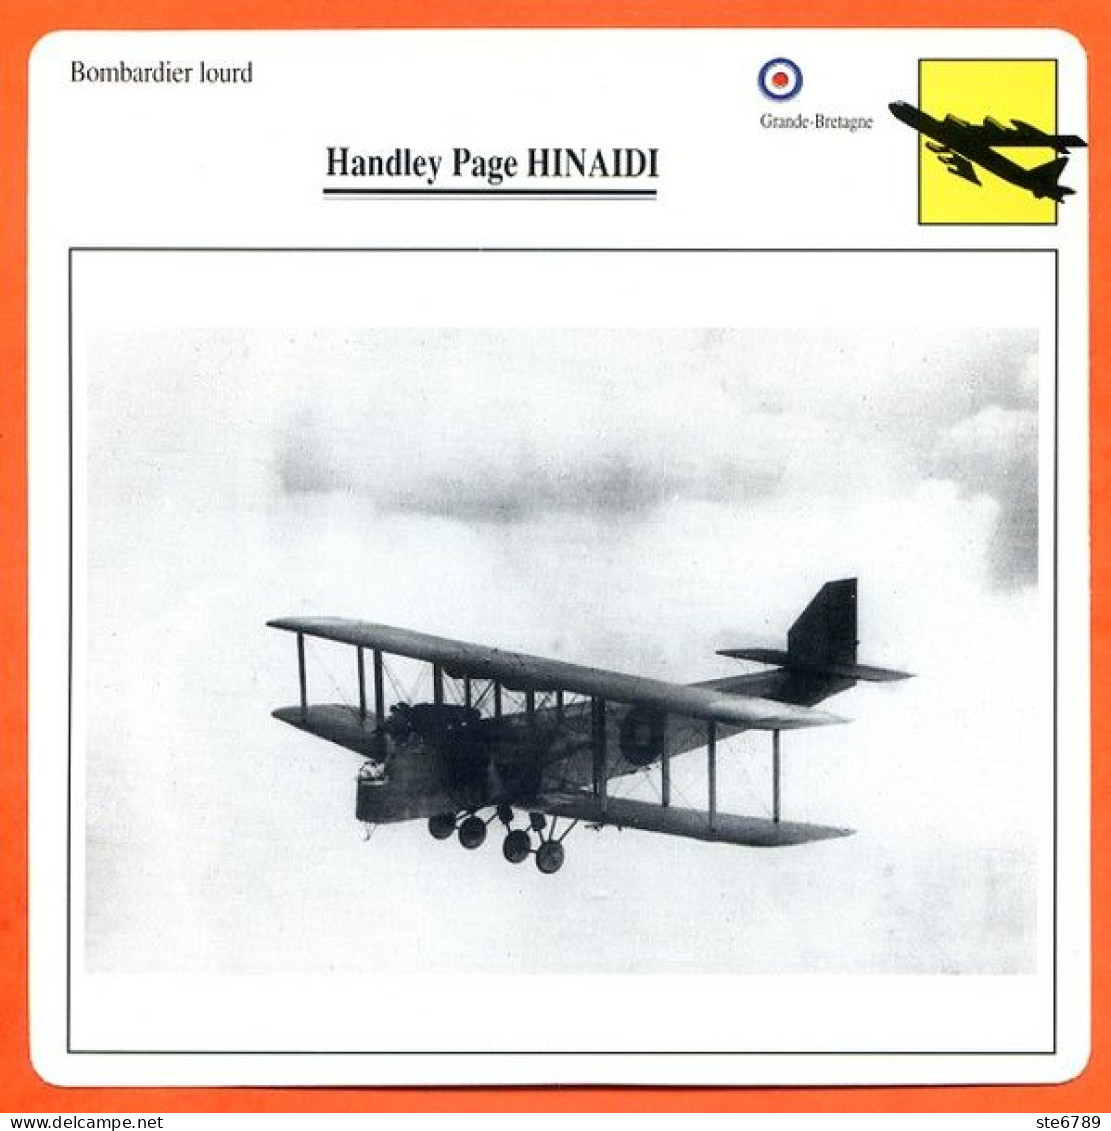 Fiche Aviation Handley Page HINAIDI  / Avion Bombardier Lourd UK Avions - Aerei